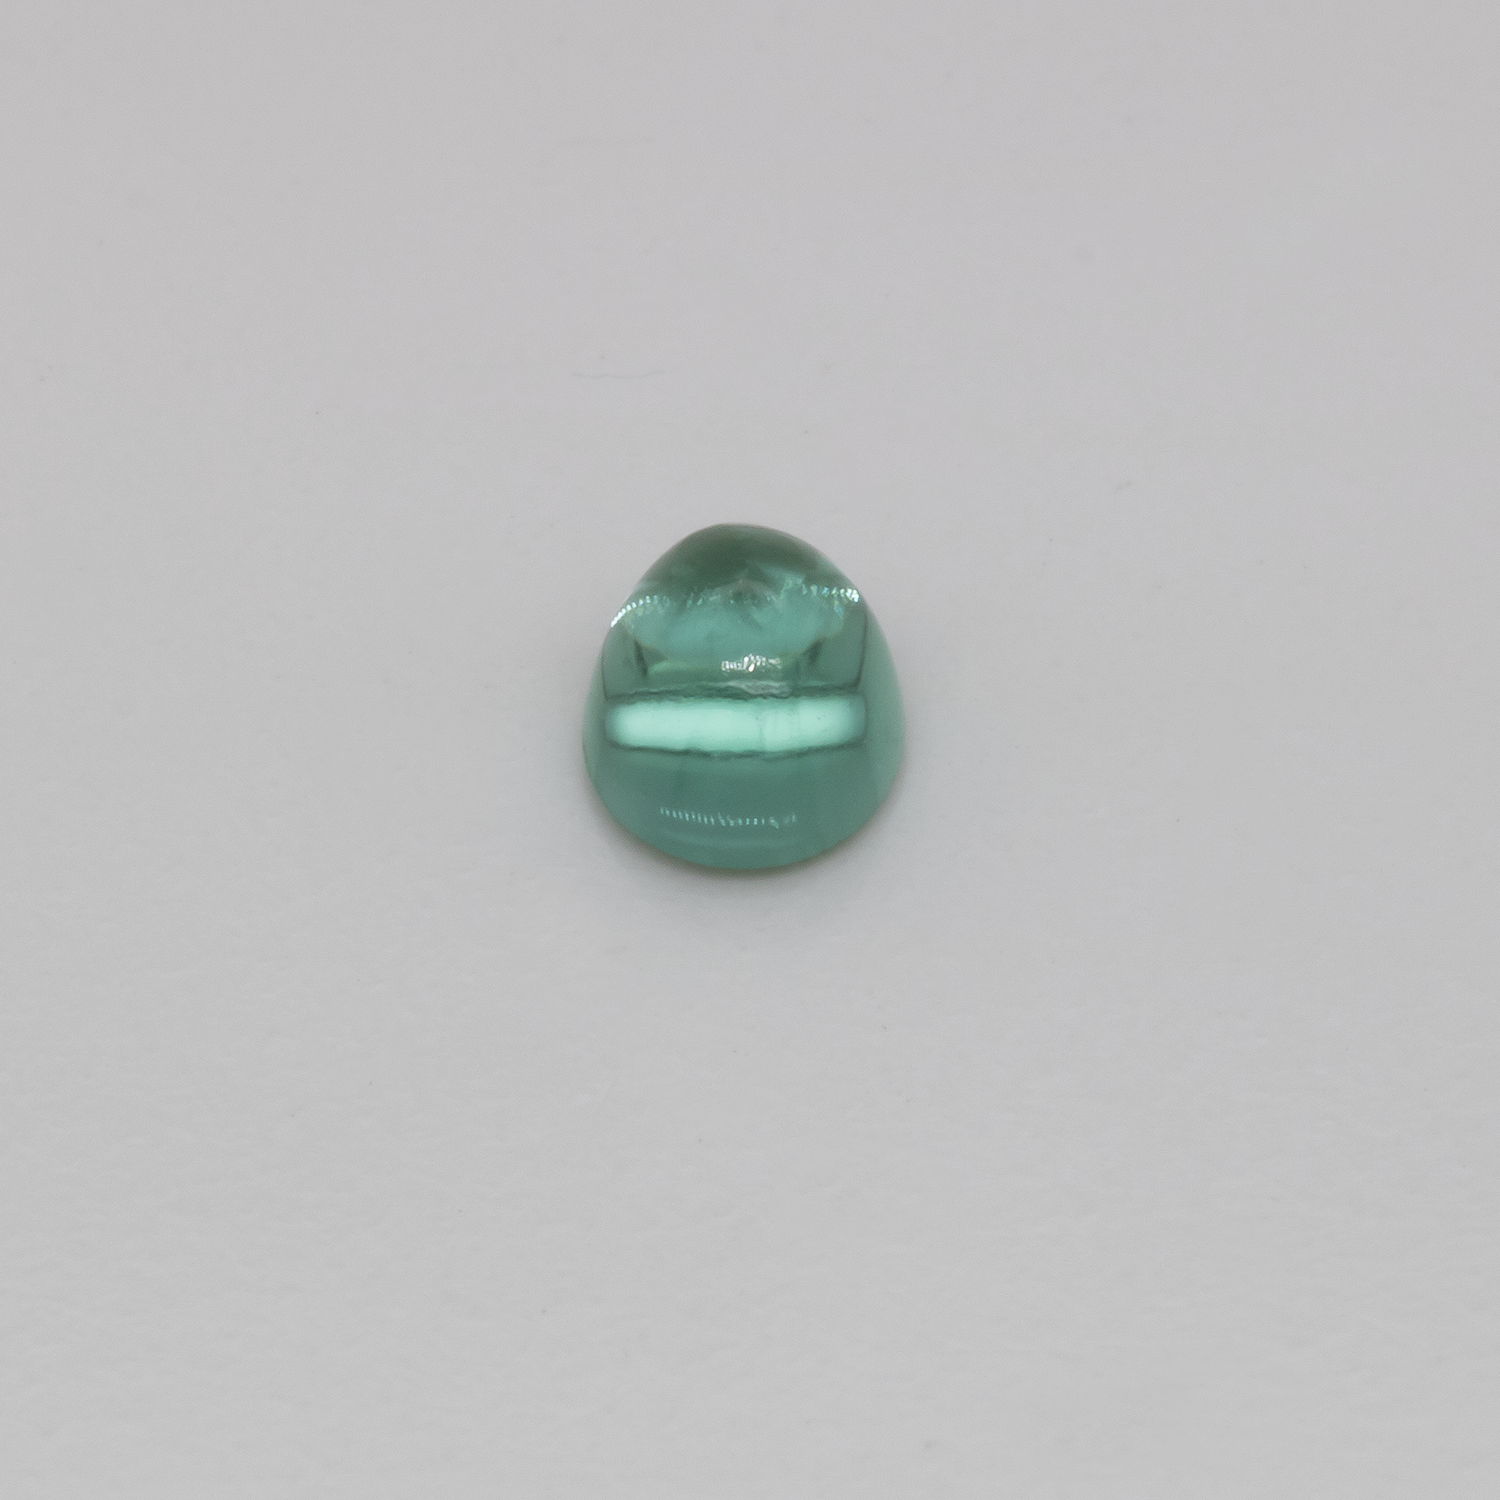 Turmalin - grün/blau, oval, 5x4 mm, 0,45 cts, Nr. TR101303